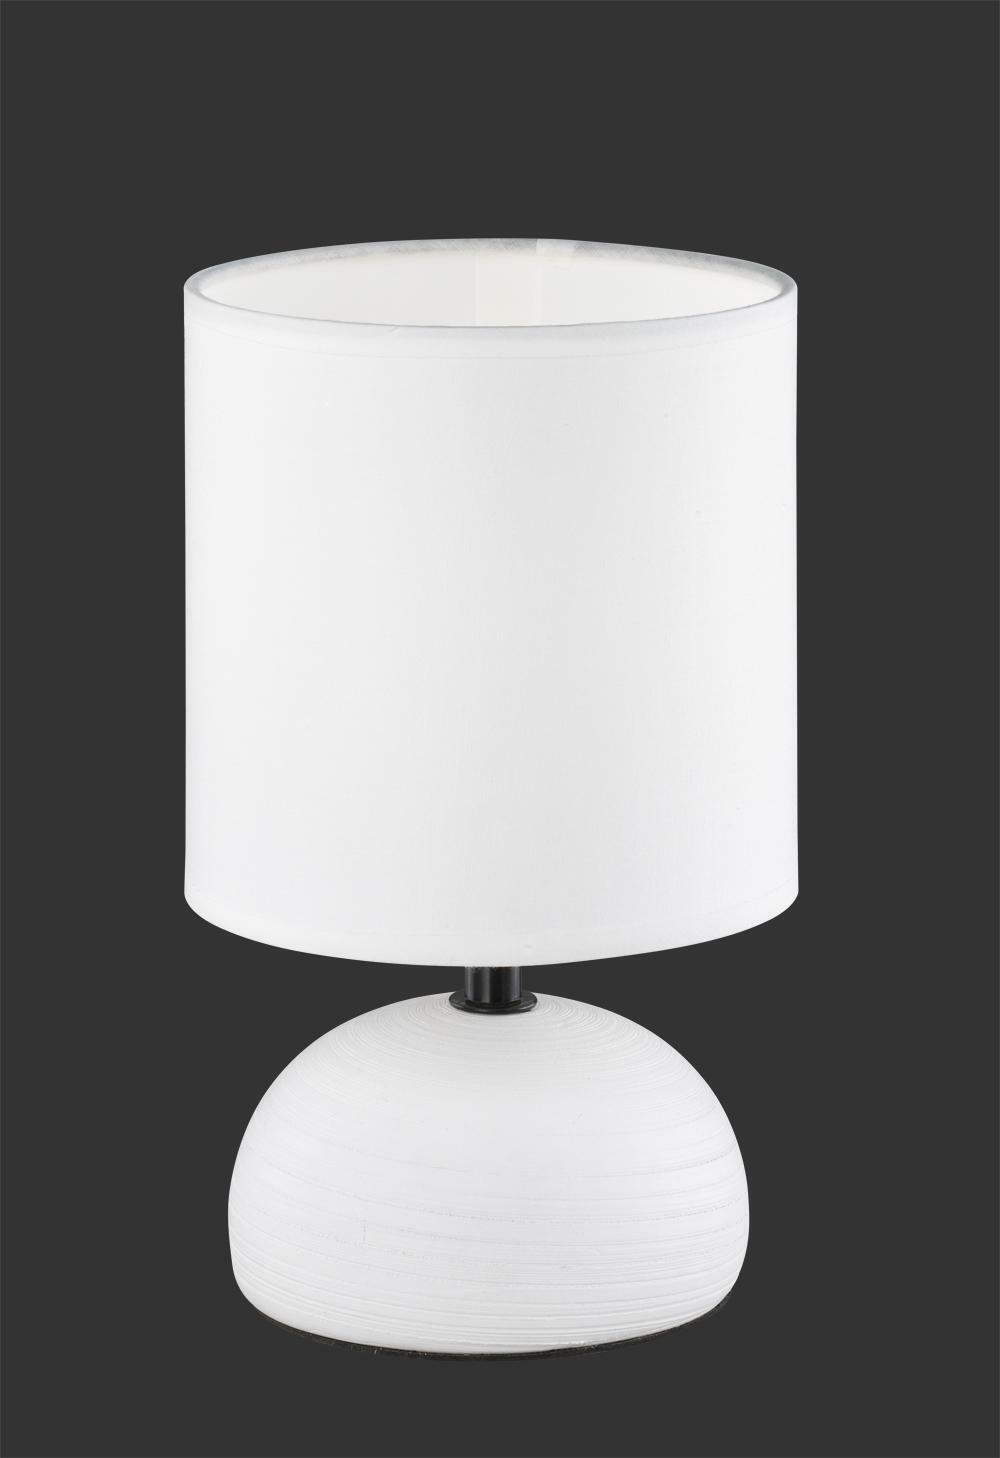 trio lighting luci lampada da tavolo base ceramica bianca paralume bianco e14 r50351001